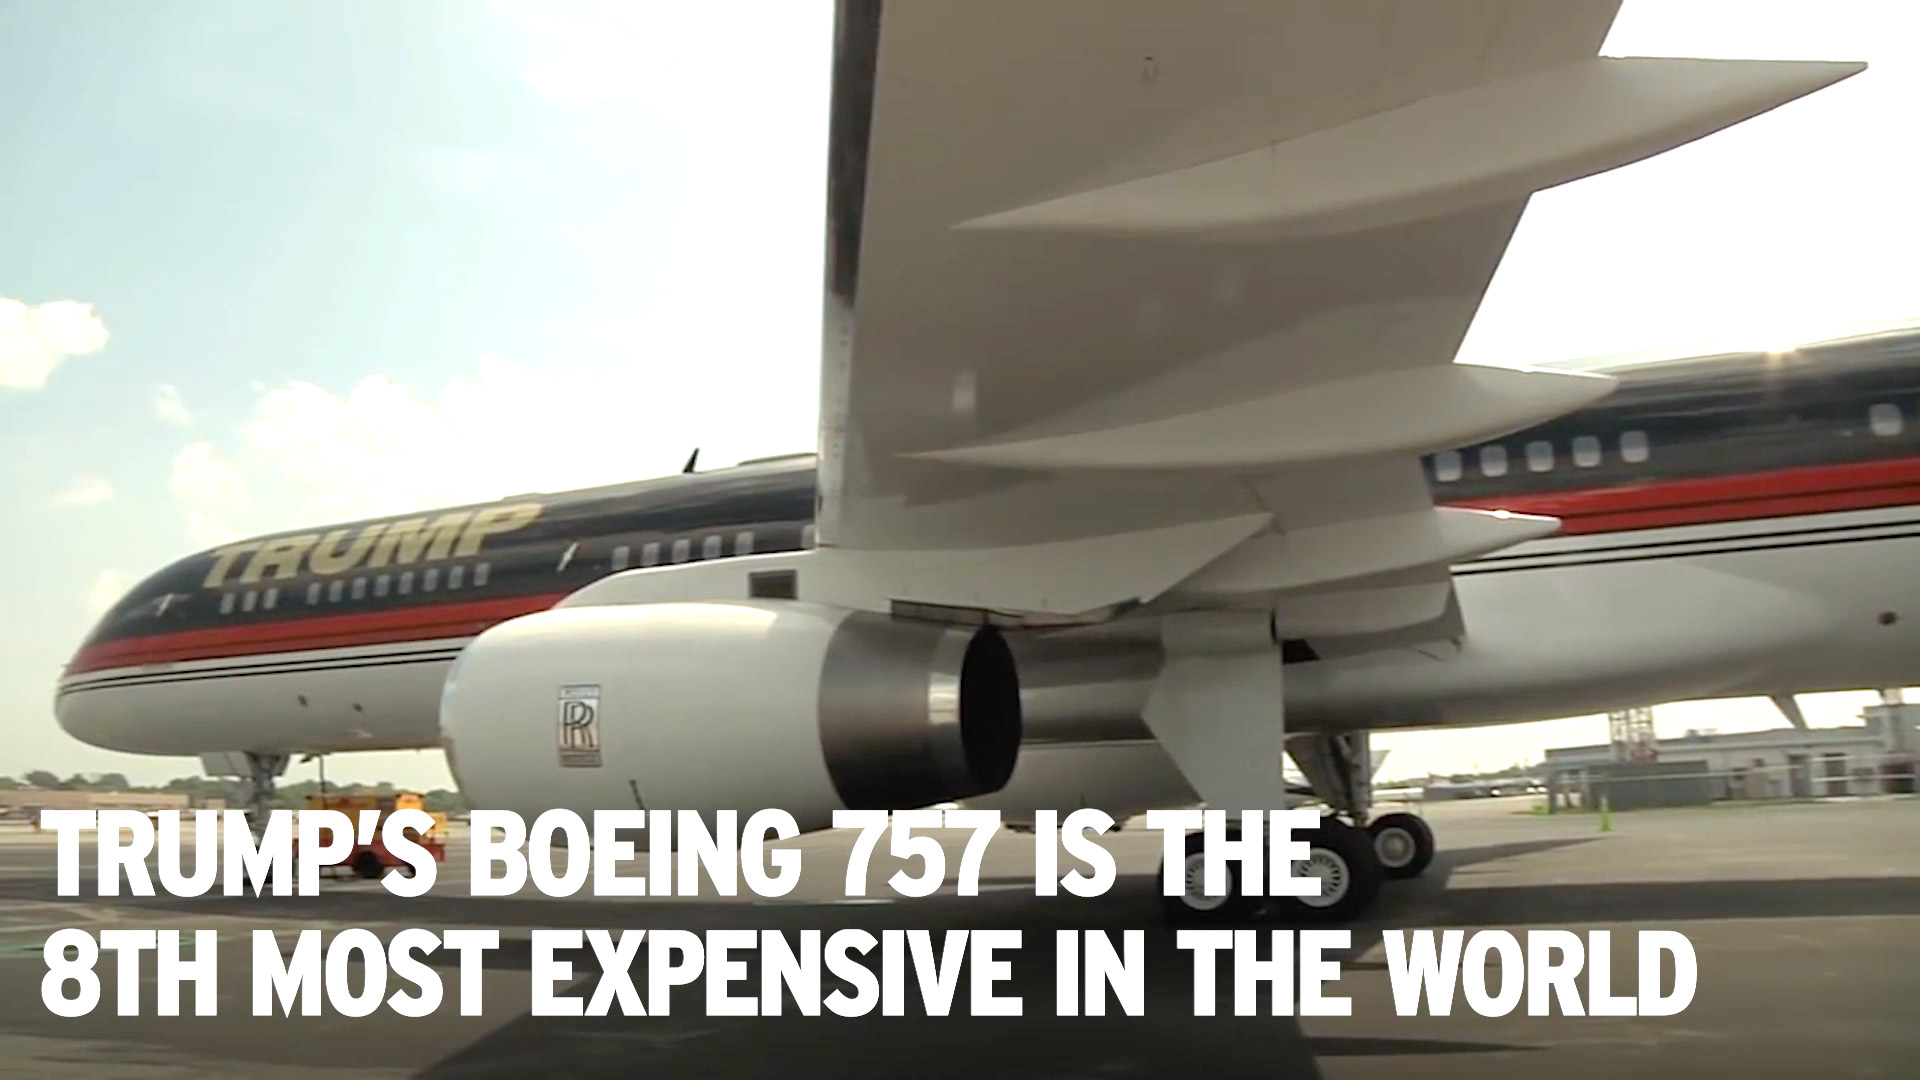 Donald Trump's Plane: Inside the Gold-Plated 757 Jet | JetSet